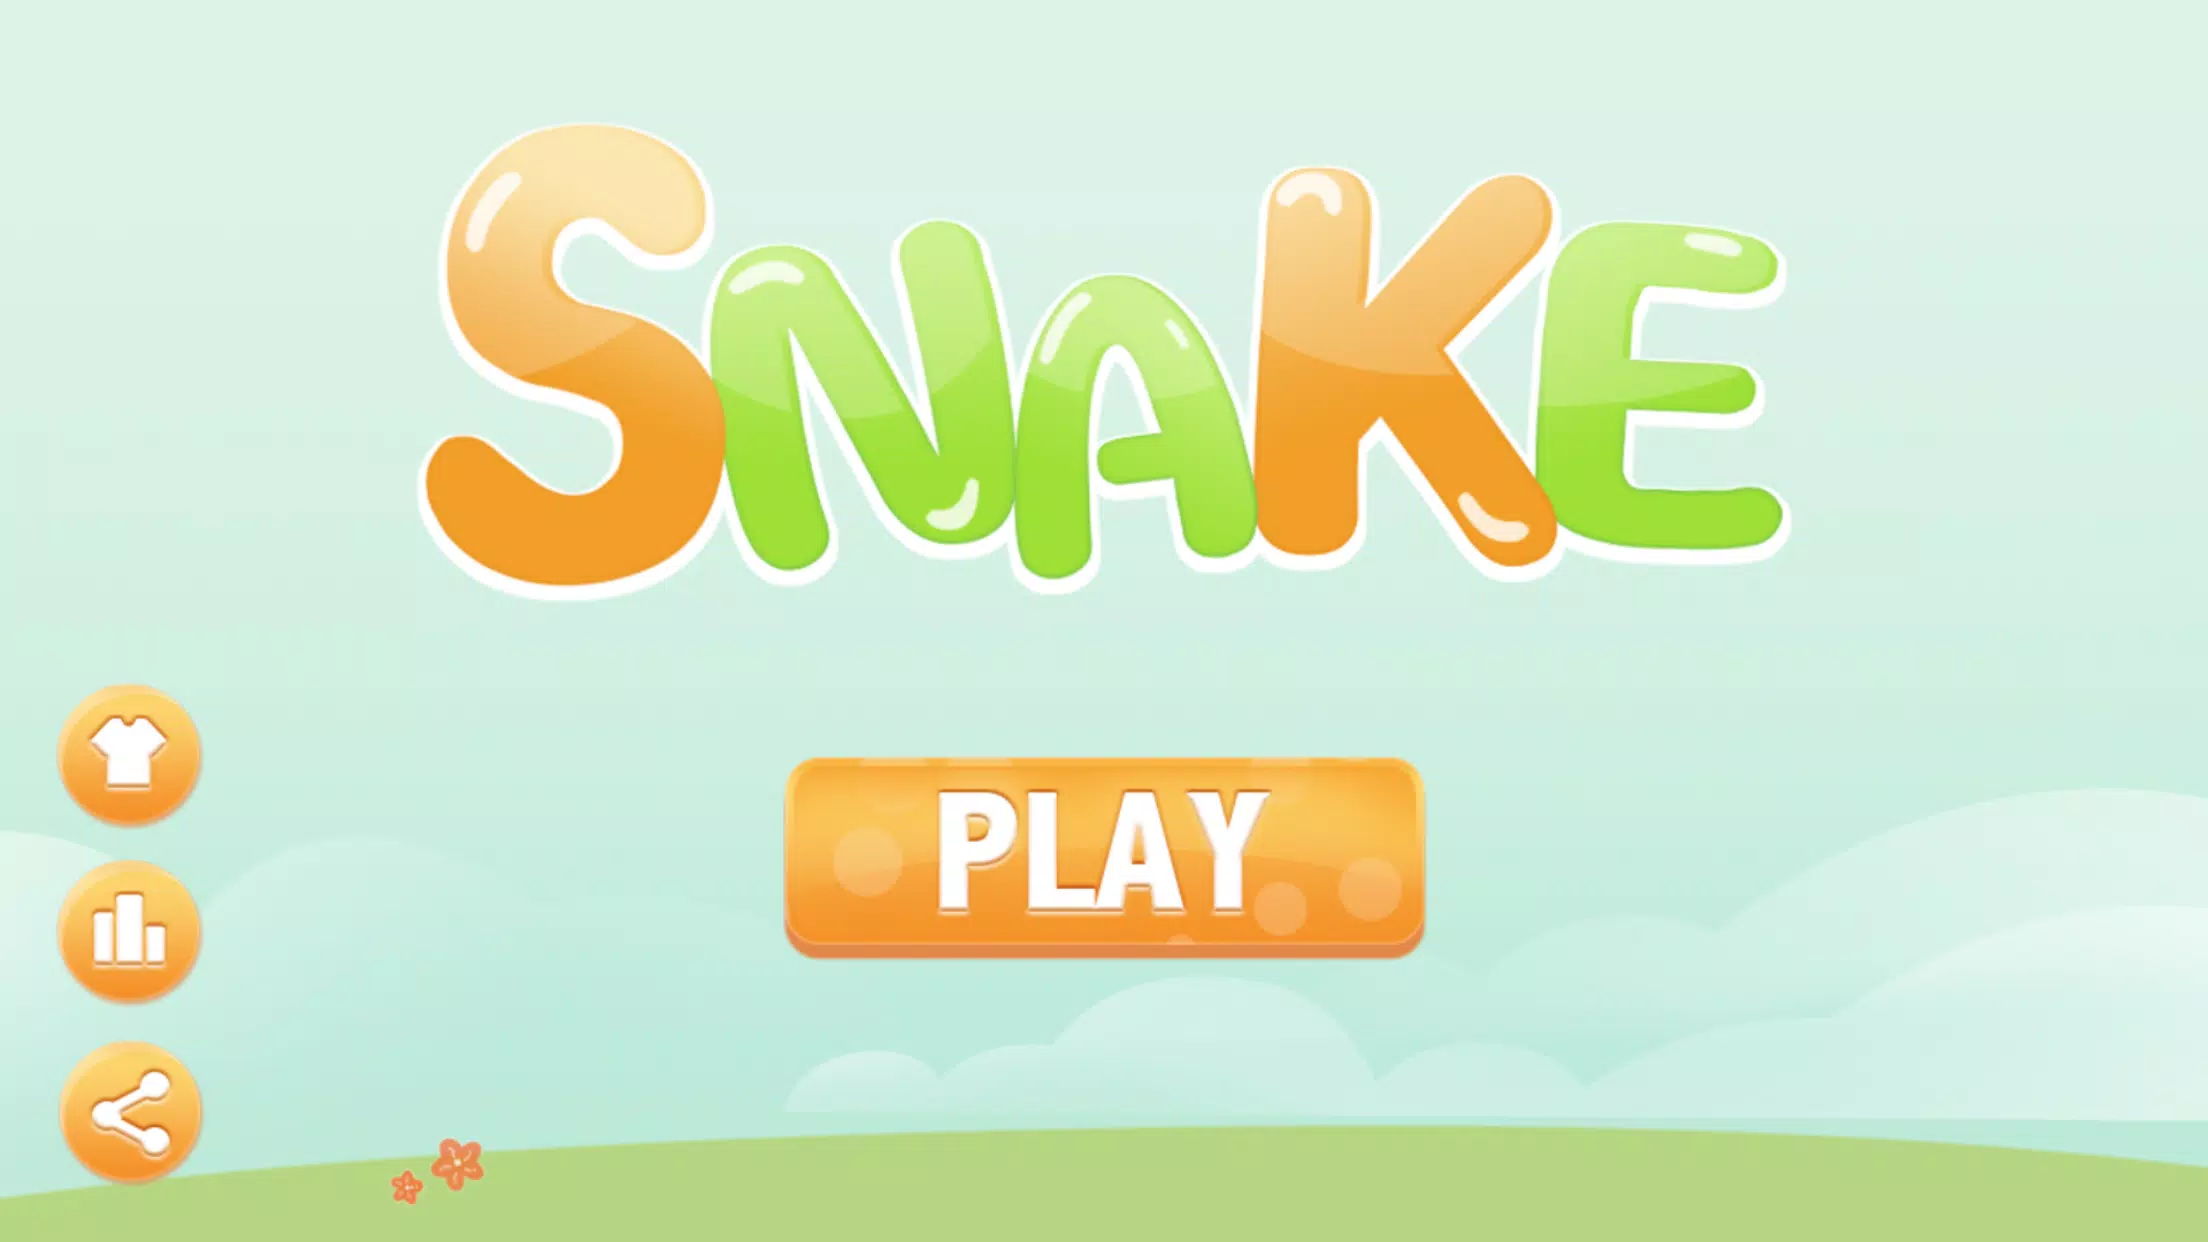 Snake War APK for Android Download